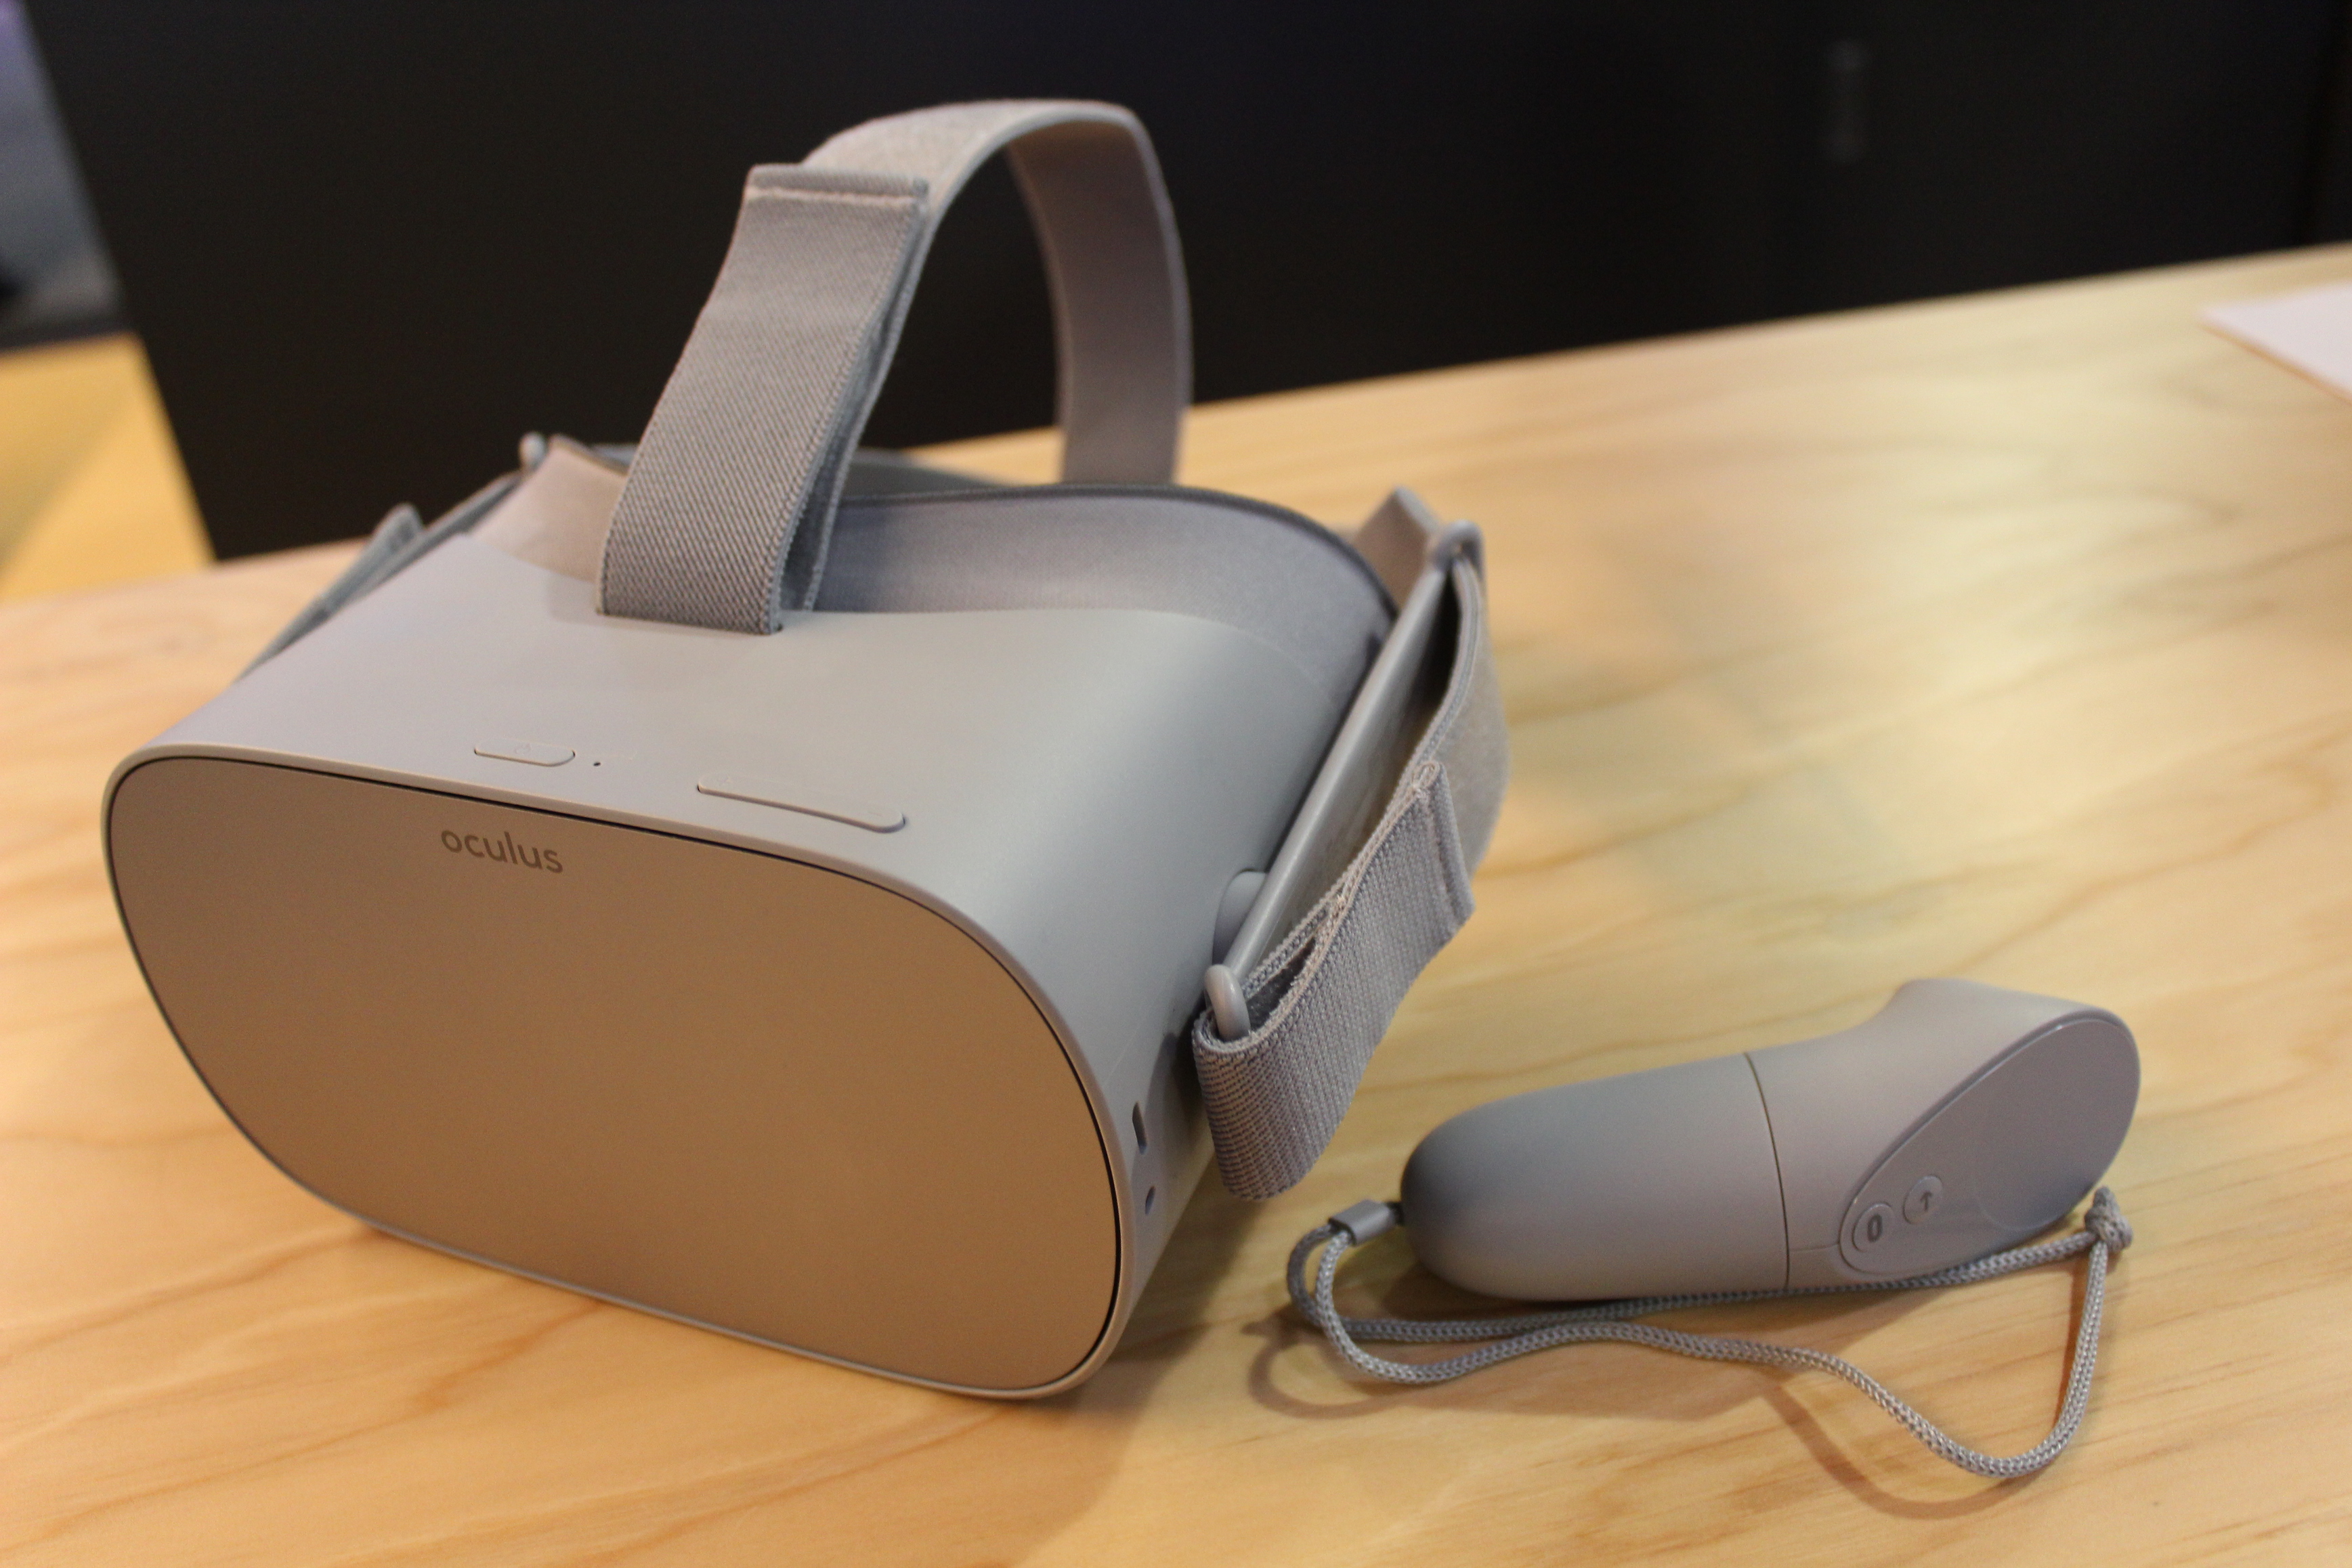 oculus go vr gaming headset